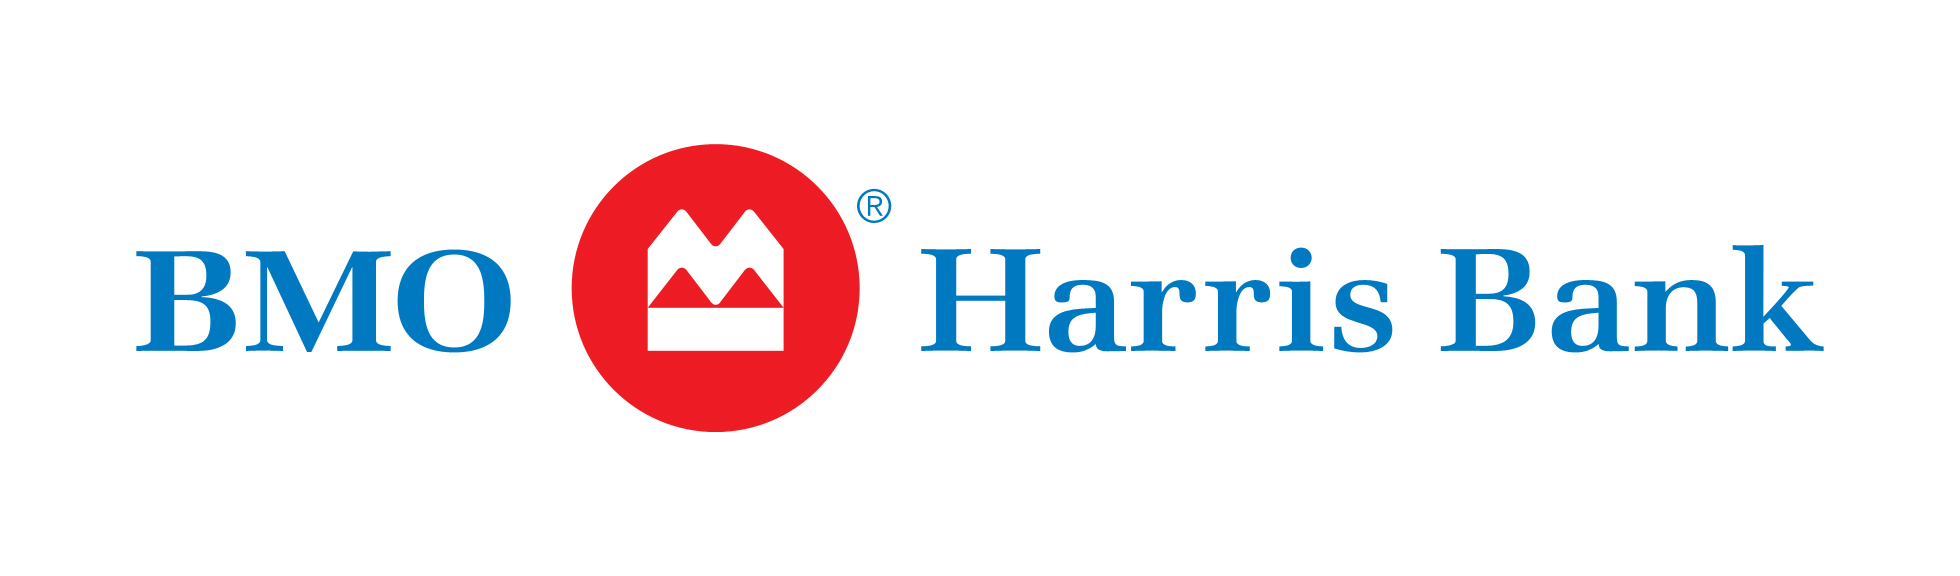 bmo-harris-color logo.jpg